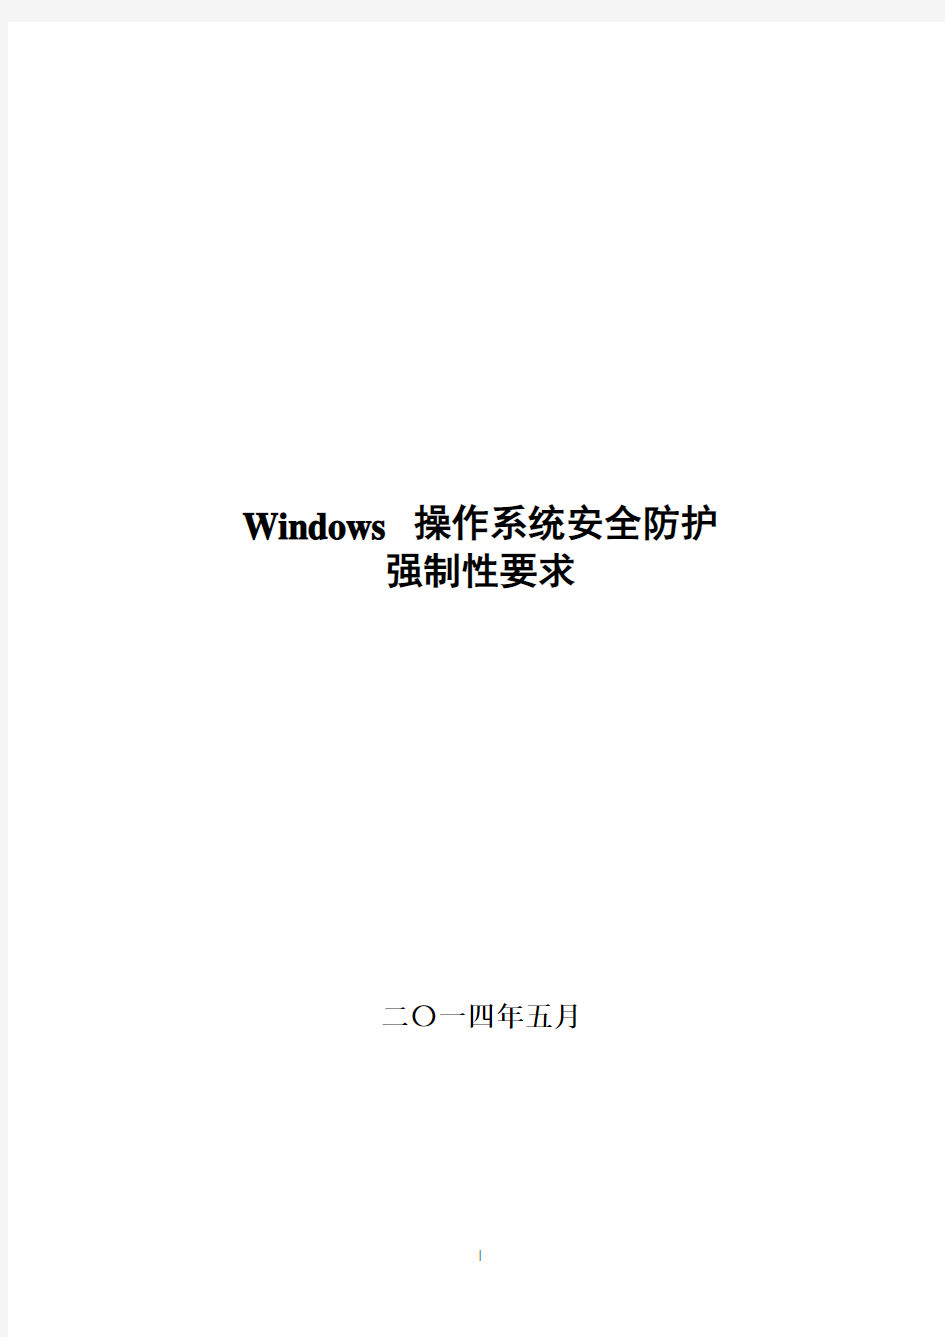 Windows 操作系统安全防护强制性要求